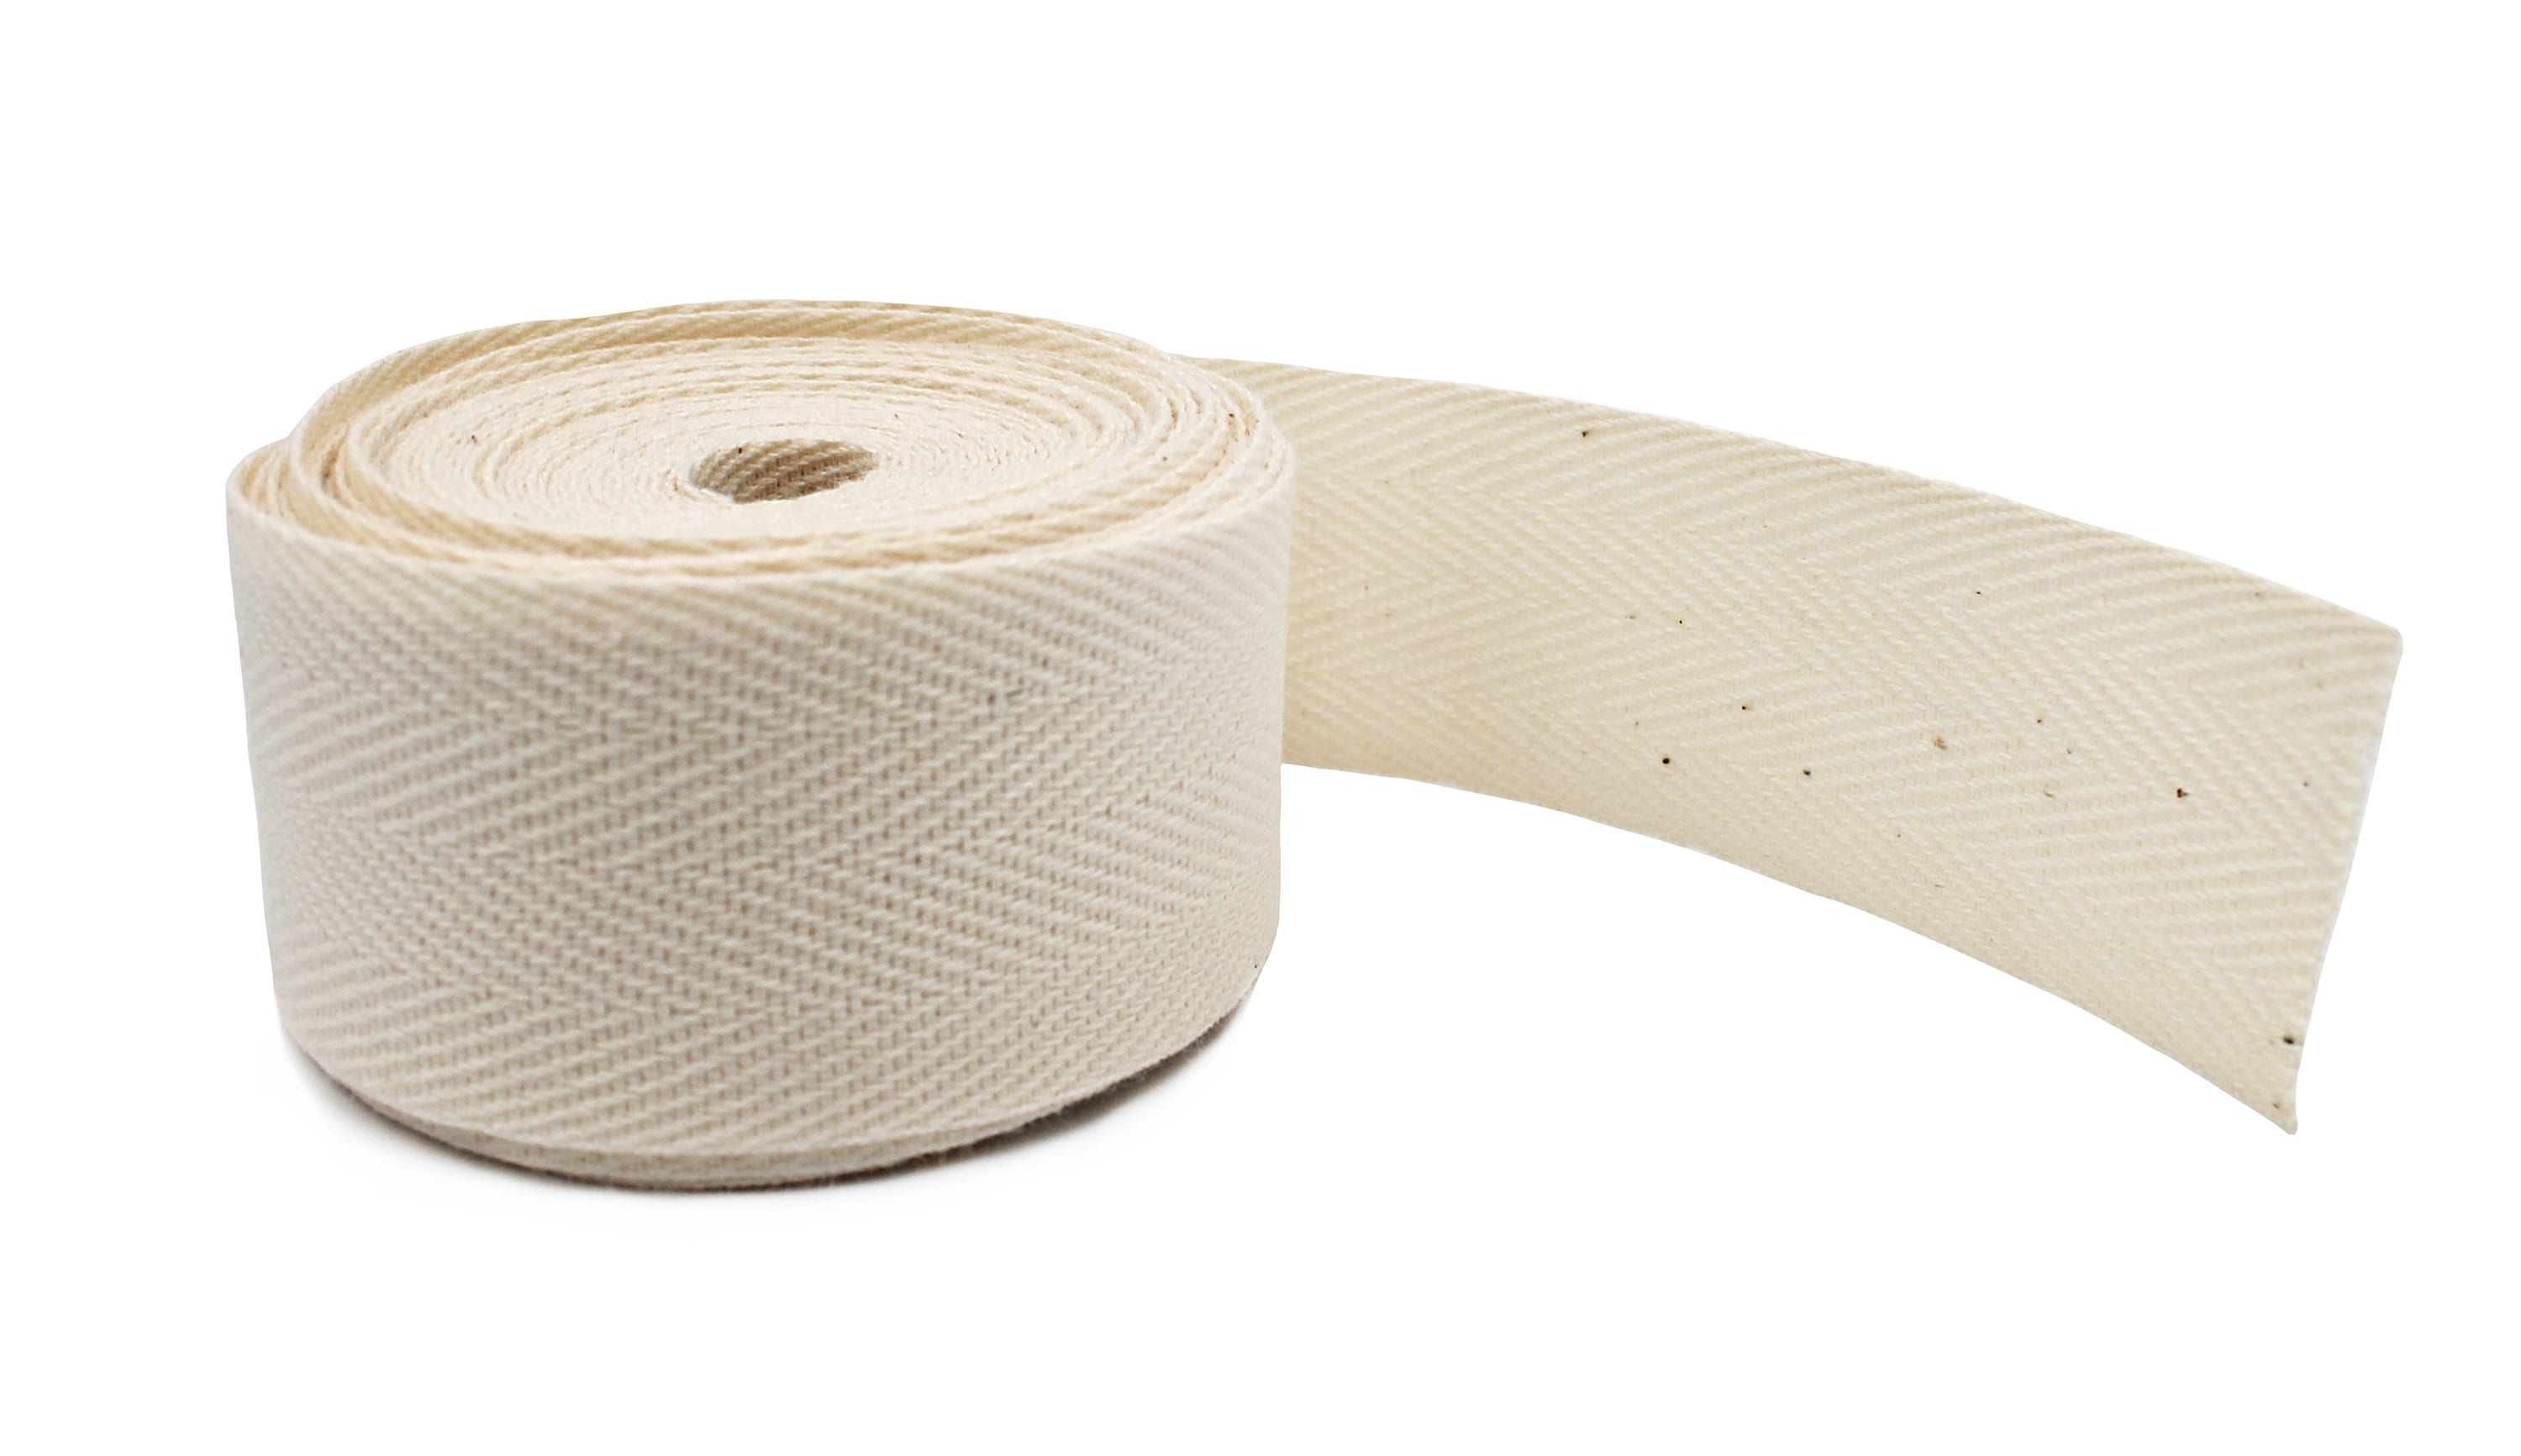 Teemico 1 Roll of 55 Yards Natural Cotton Twill Tape Ribbon Herringbone Ribbon (Beige, 2.5 cm)